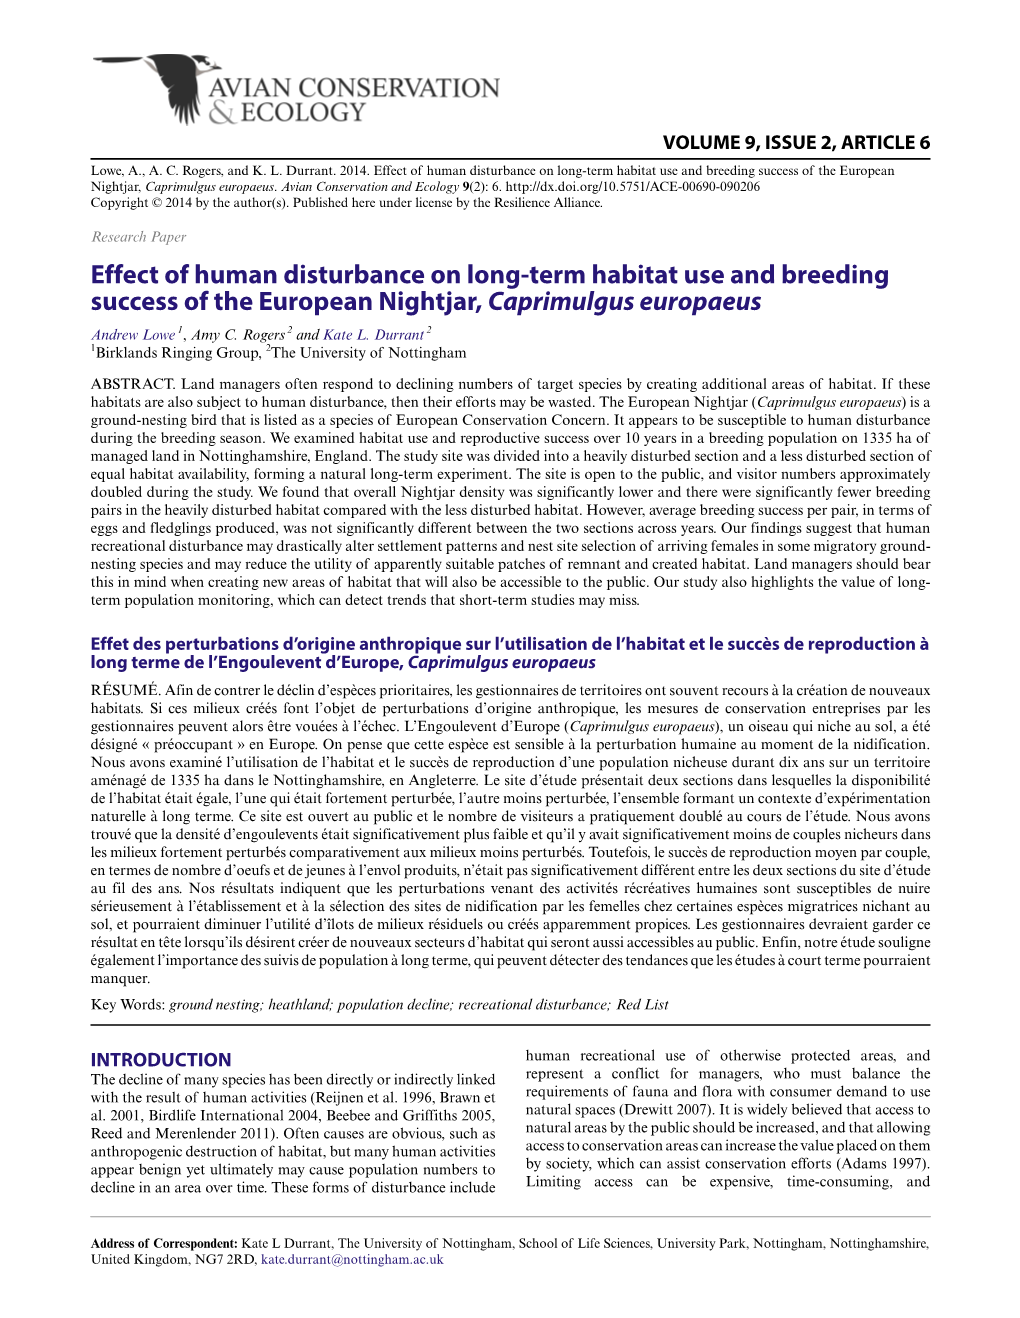 Effect of Human Disturbance on Long-Term Habitat Use and Breeding Success of the European Nightjar, Caprimulgus Europaeus